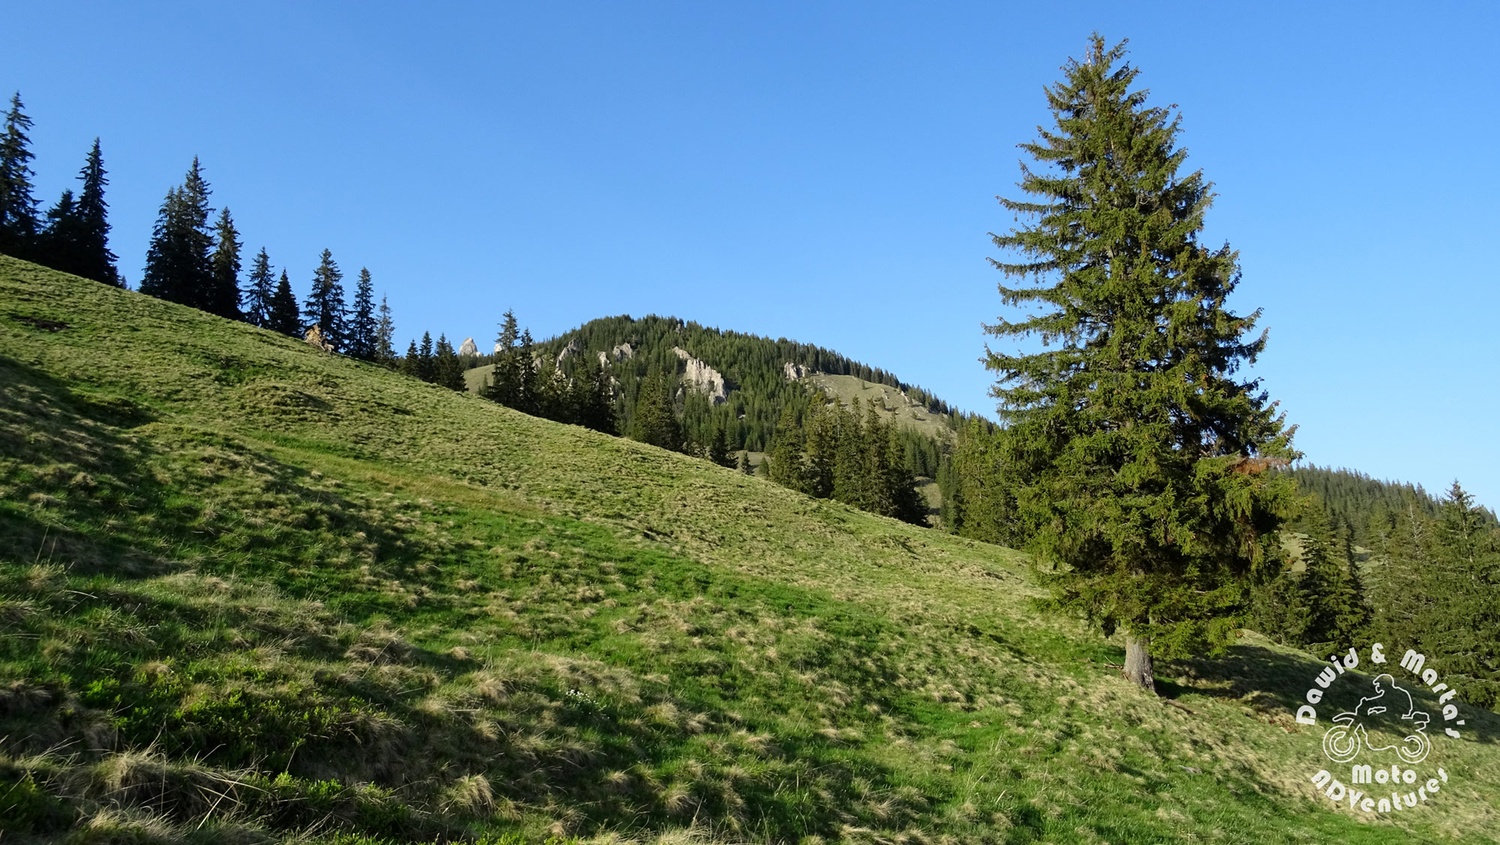 Transrarau Rarau mountain hill sides soaked with fresh green color